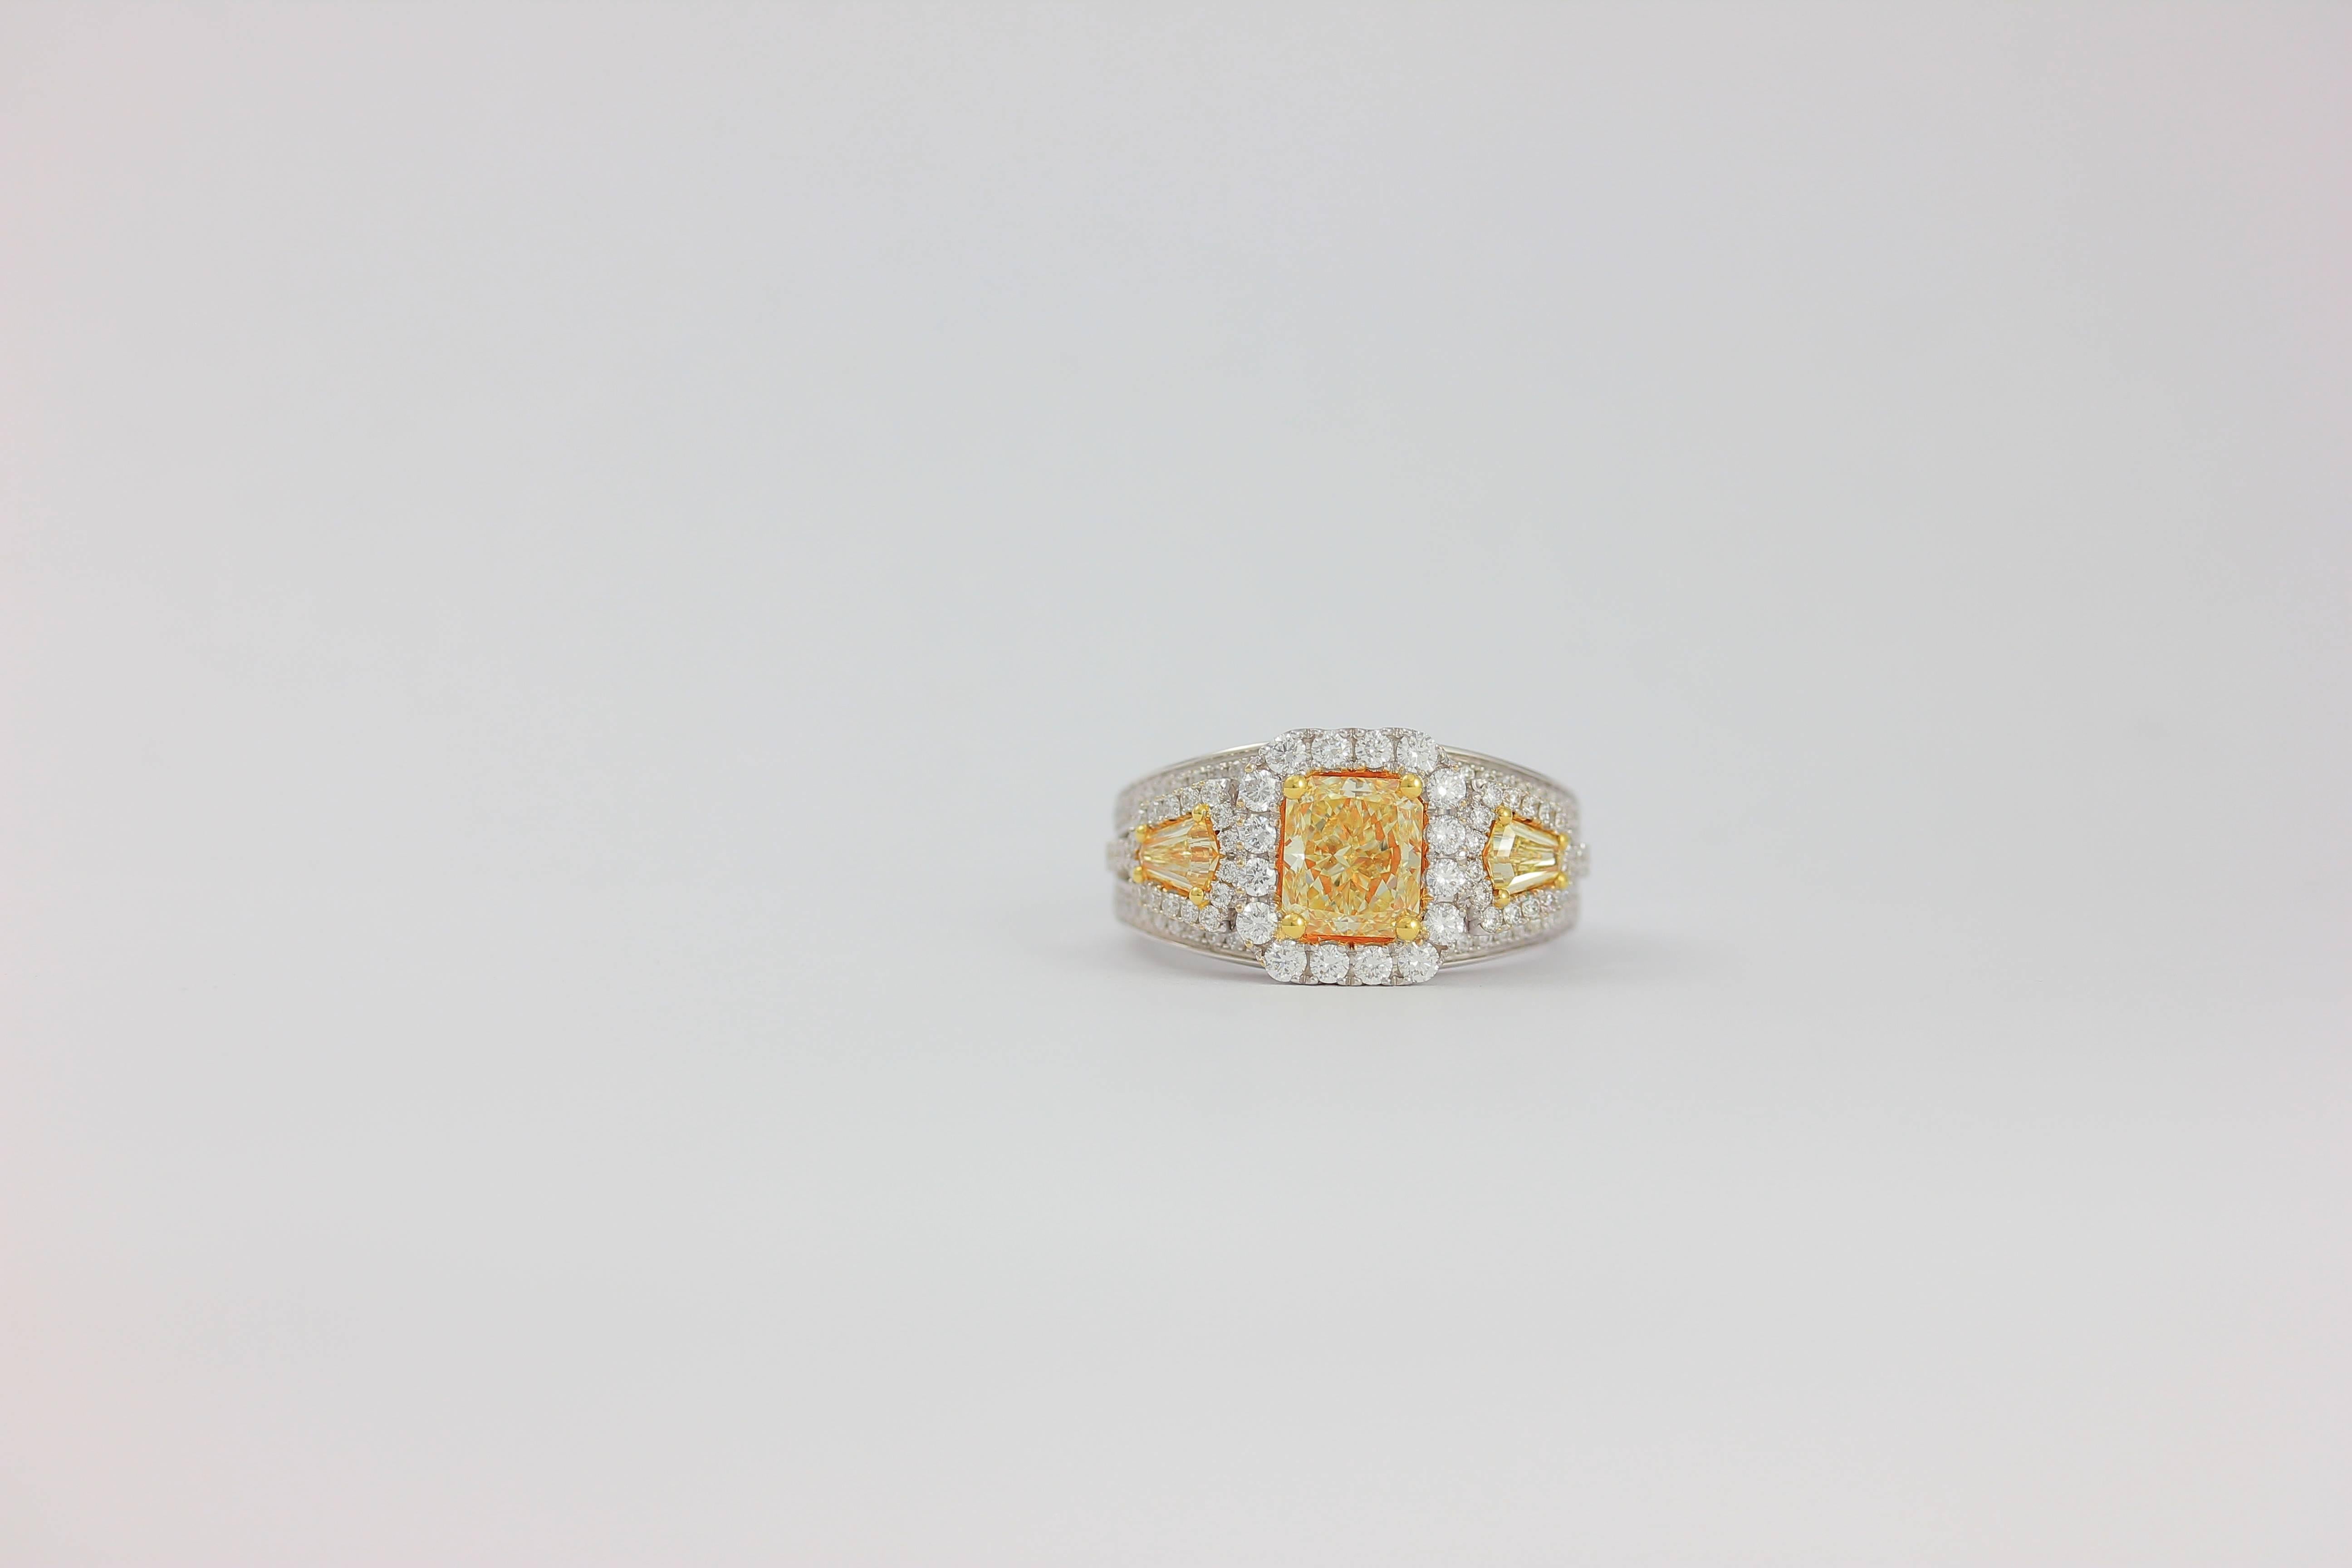 18K WG 3-STONE YELLOW DIAMOND ONE OF KIND RING 

Radiant Center 1.30 CARAT
Side Yellow Diamonds  0.48 CARAT
Diamond Count 114
White Diamond Weight  0.88 CARAT